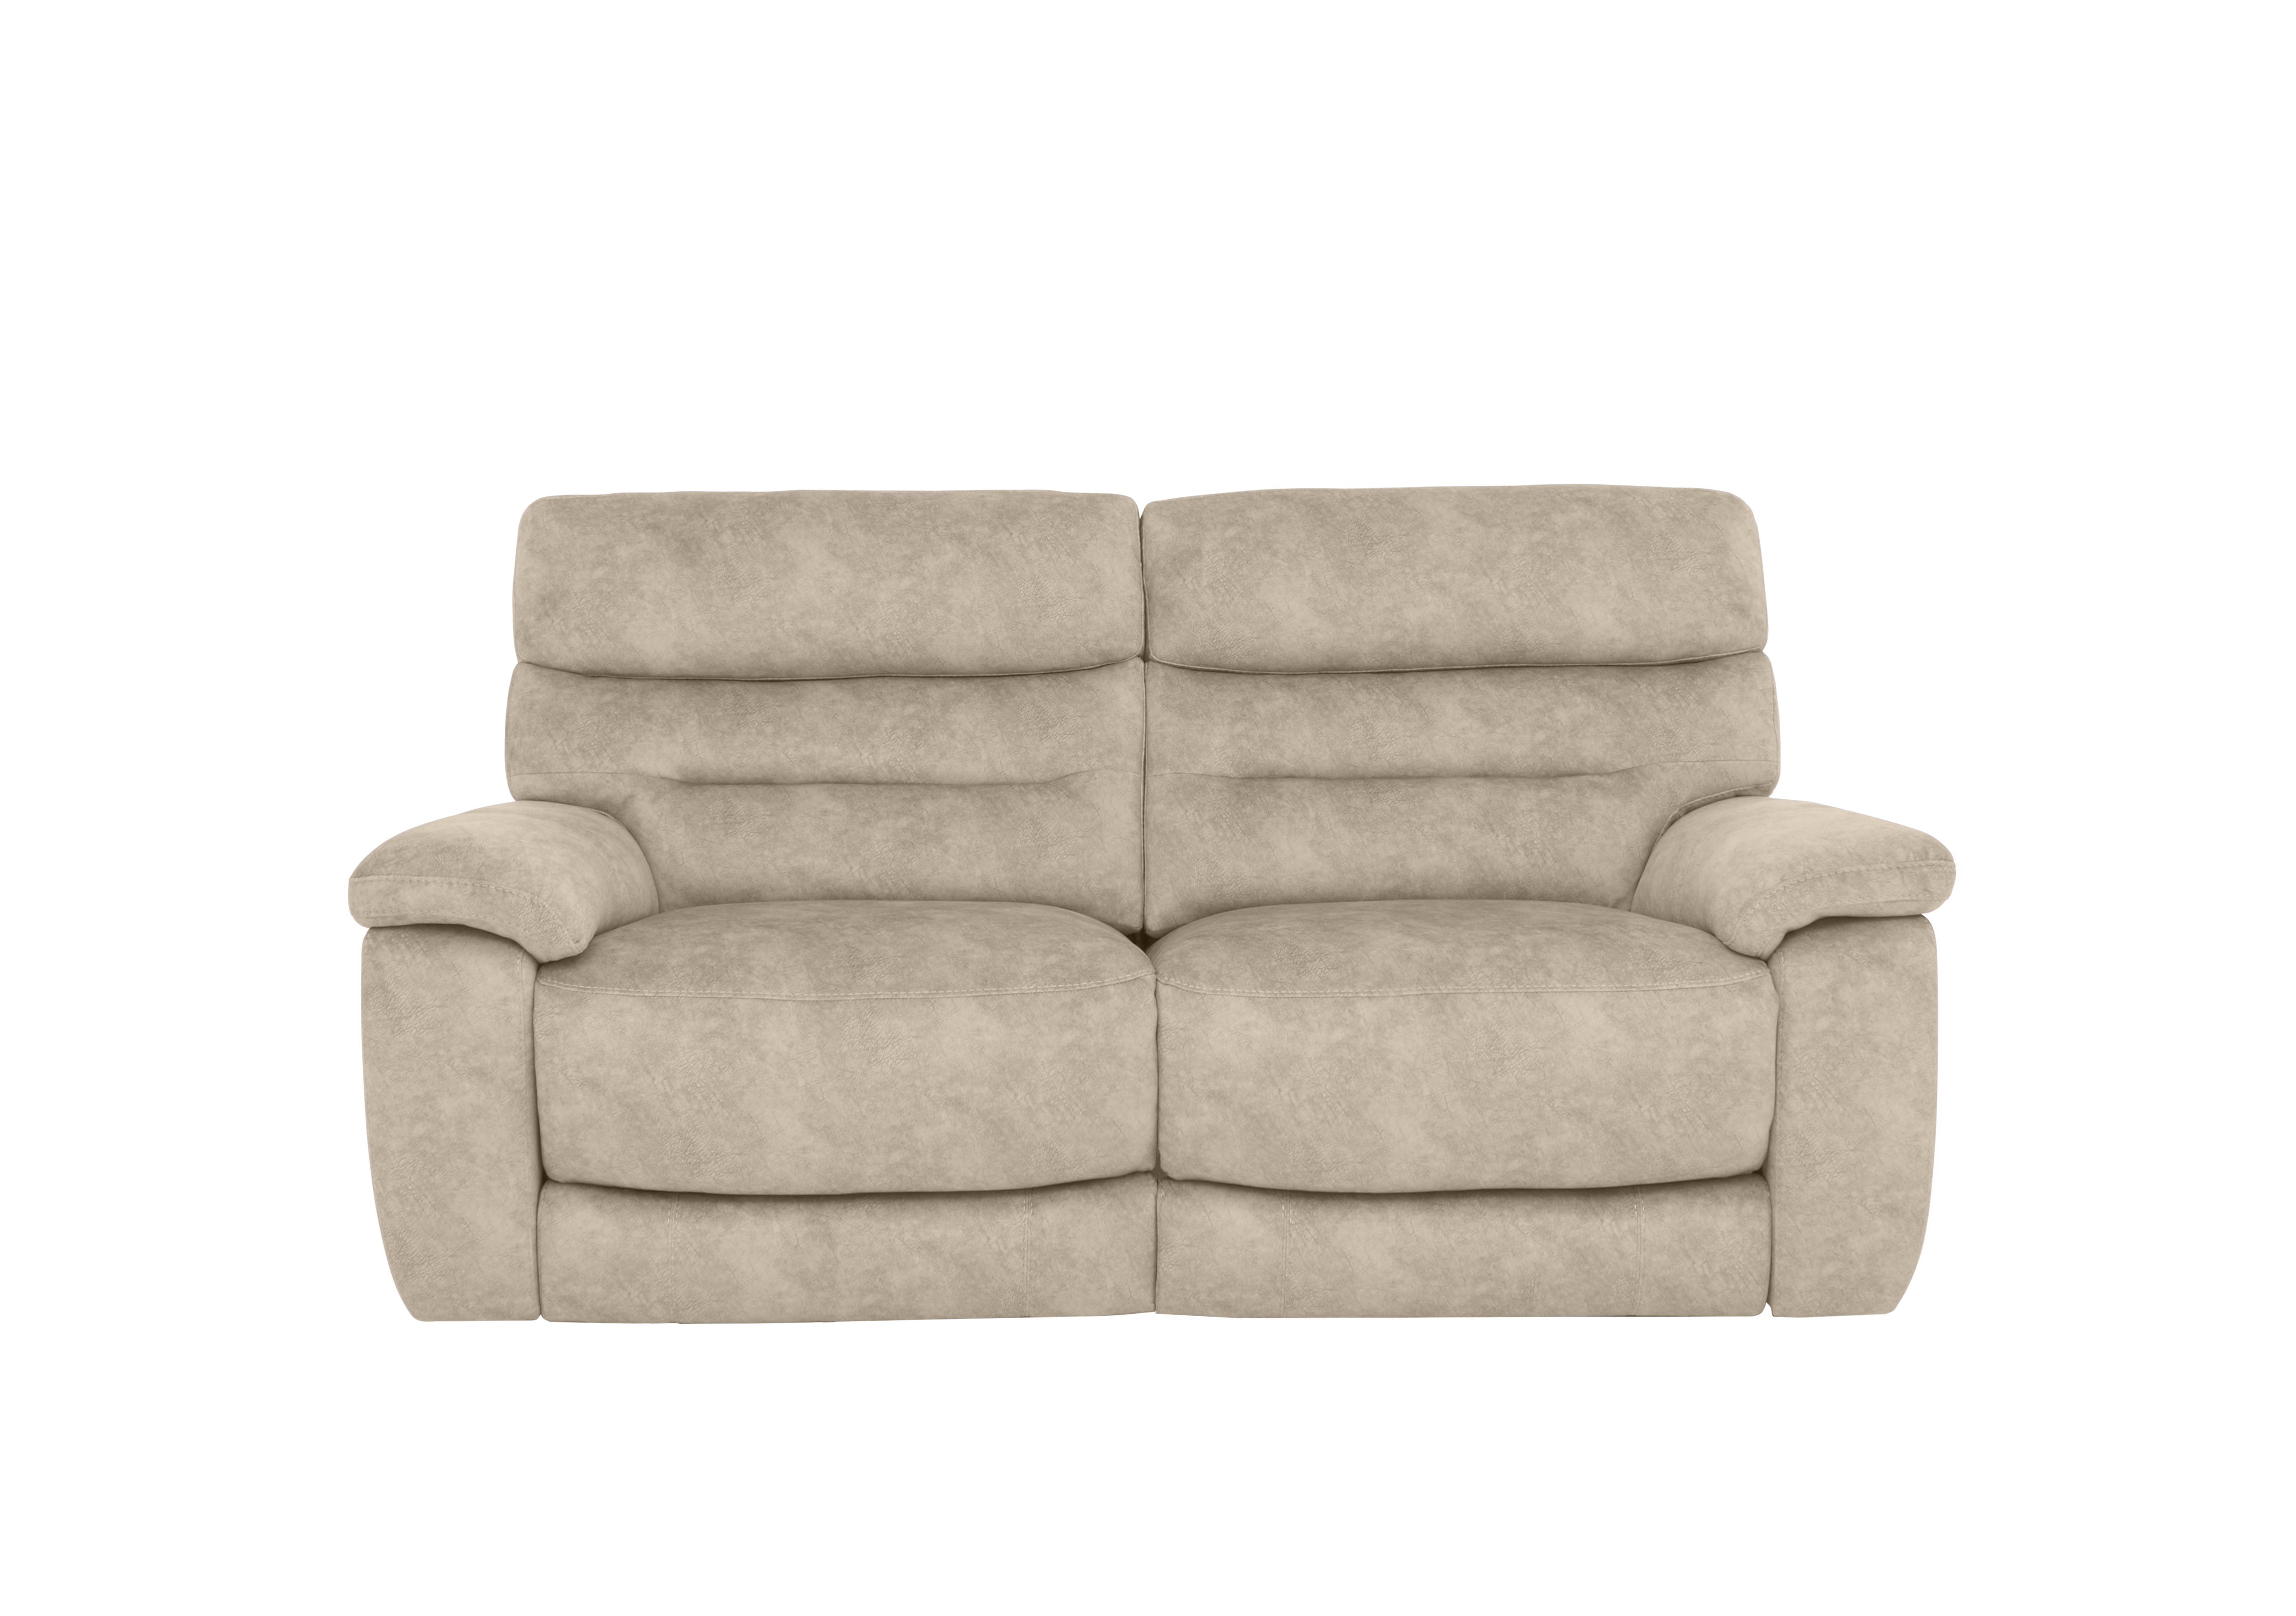 Nimbus 2 Seater Fabric Sofa in Bfa-Bnn-R26 Cream on Furniture Village